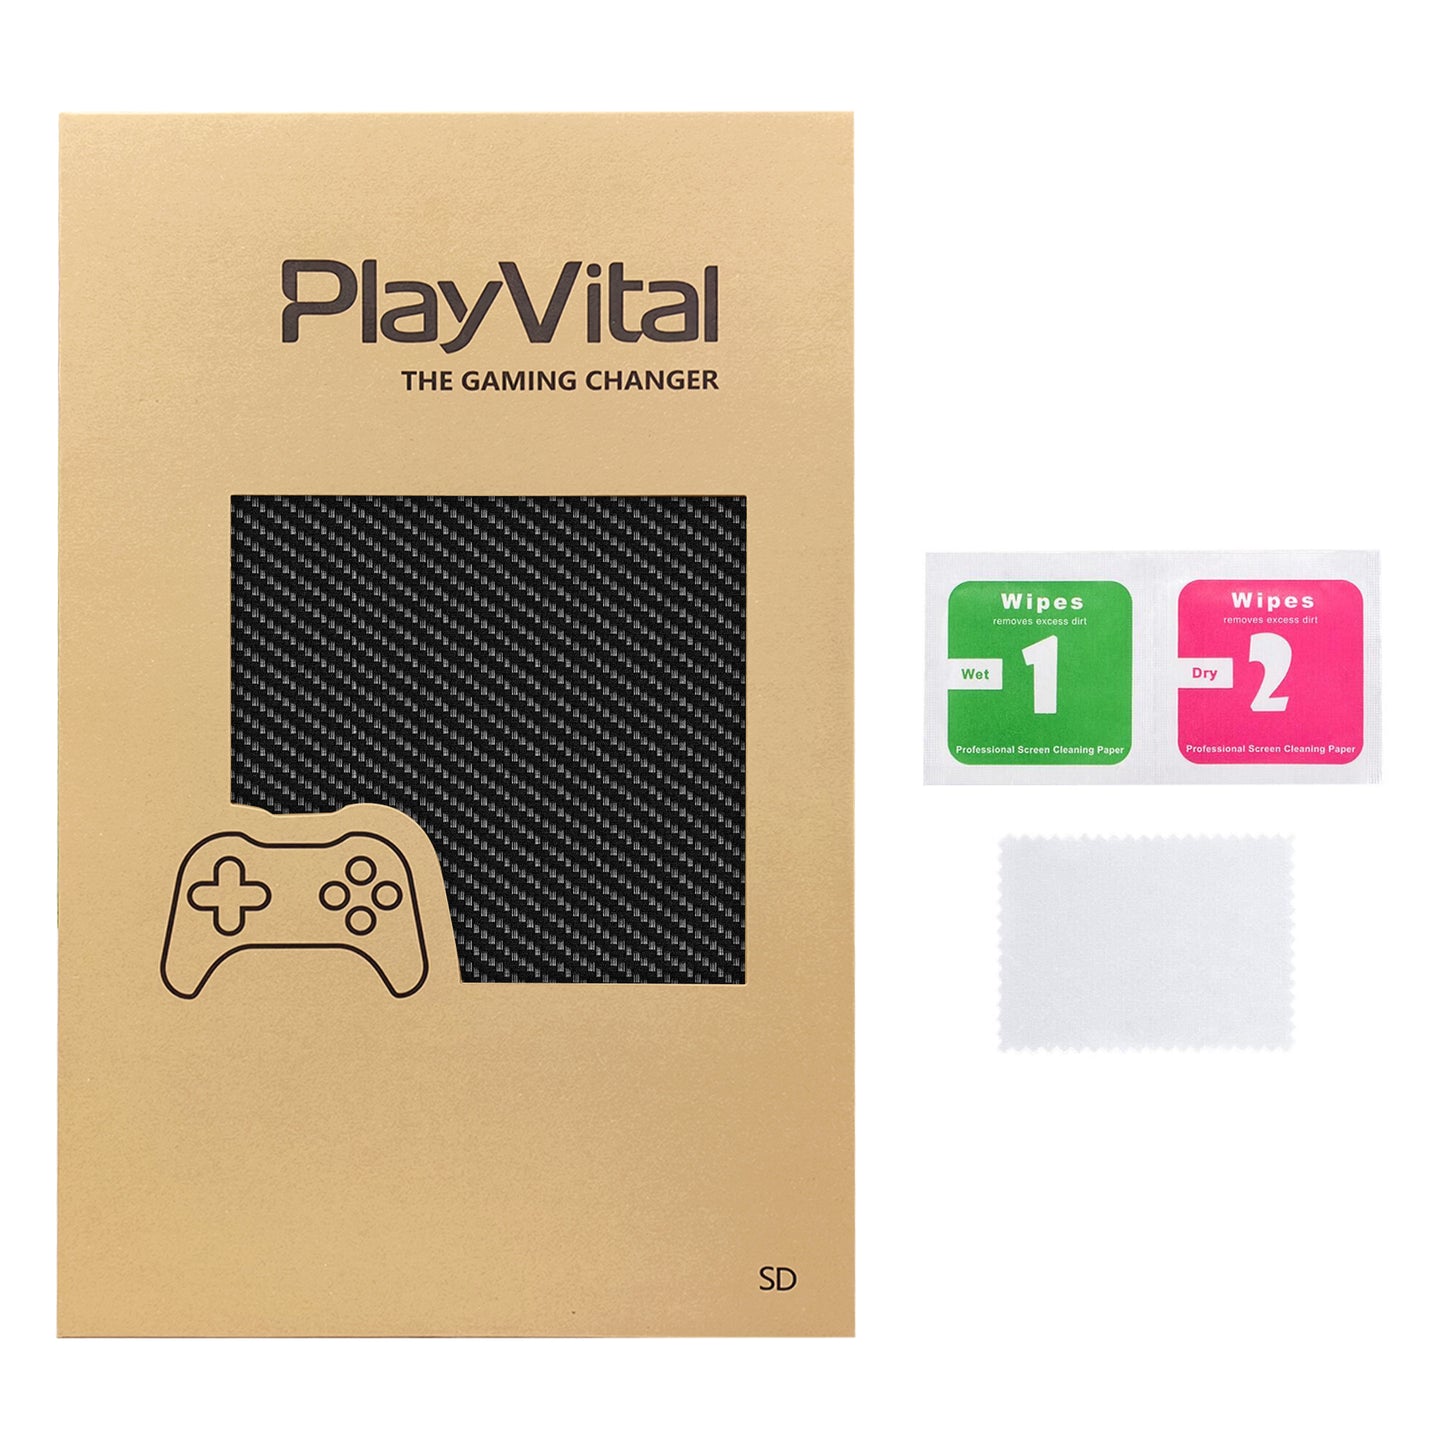 PlayVital Full Set Protective Skin Decal for Steam Deck, Custom Stickers Vinyl Cover for Steam Deck Handheld Gaming PC - Black Silver Carbon Fiber - SDTM052 PlayVital